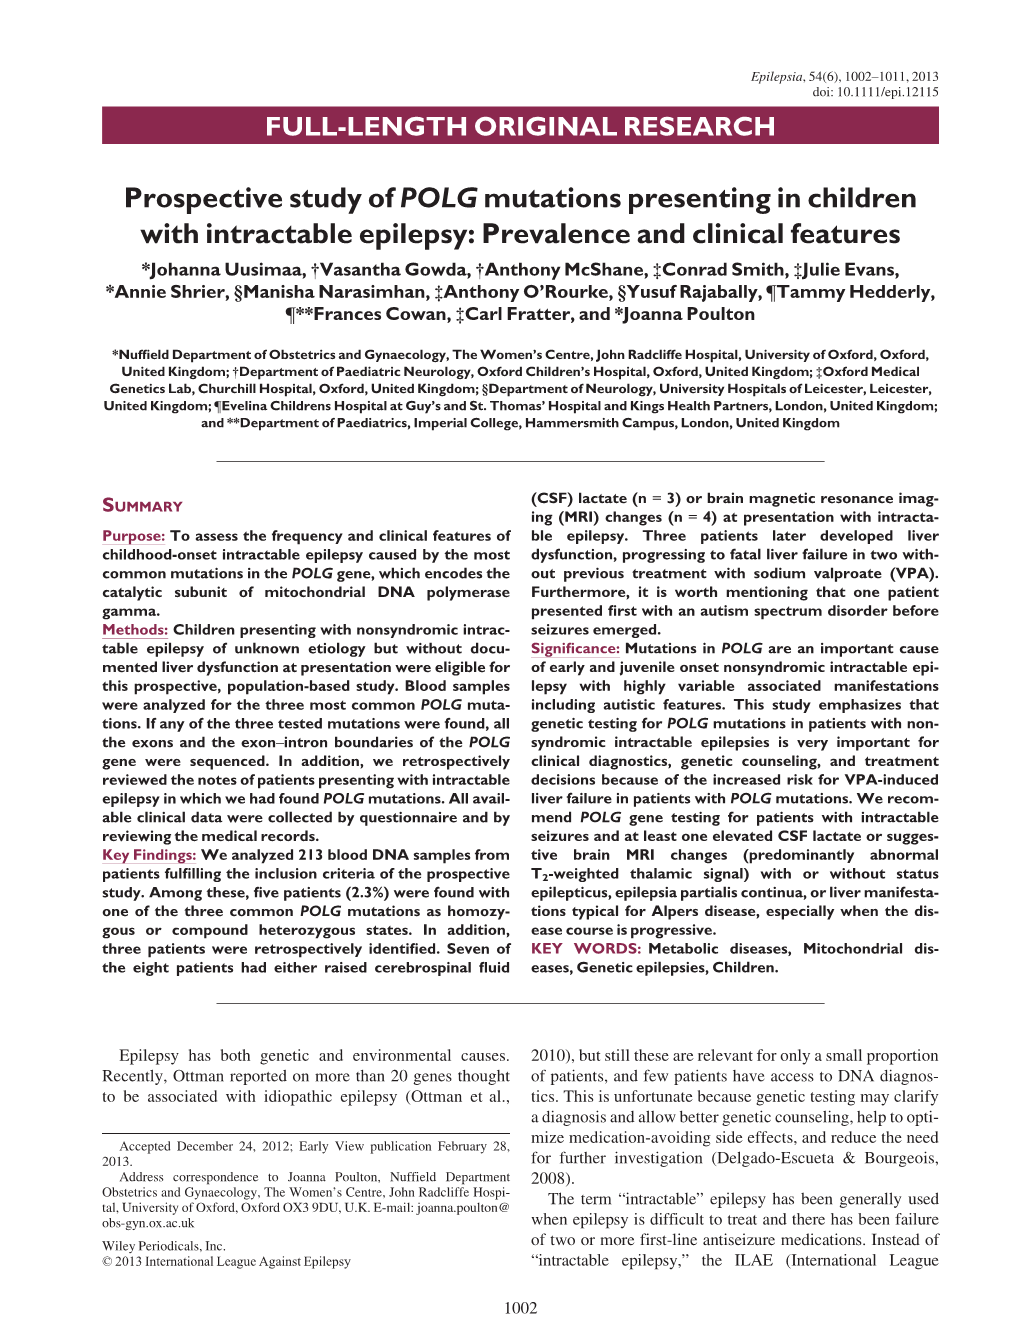 Prospective Study of POLG Mutations Presenting In